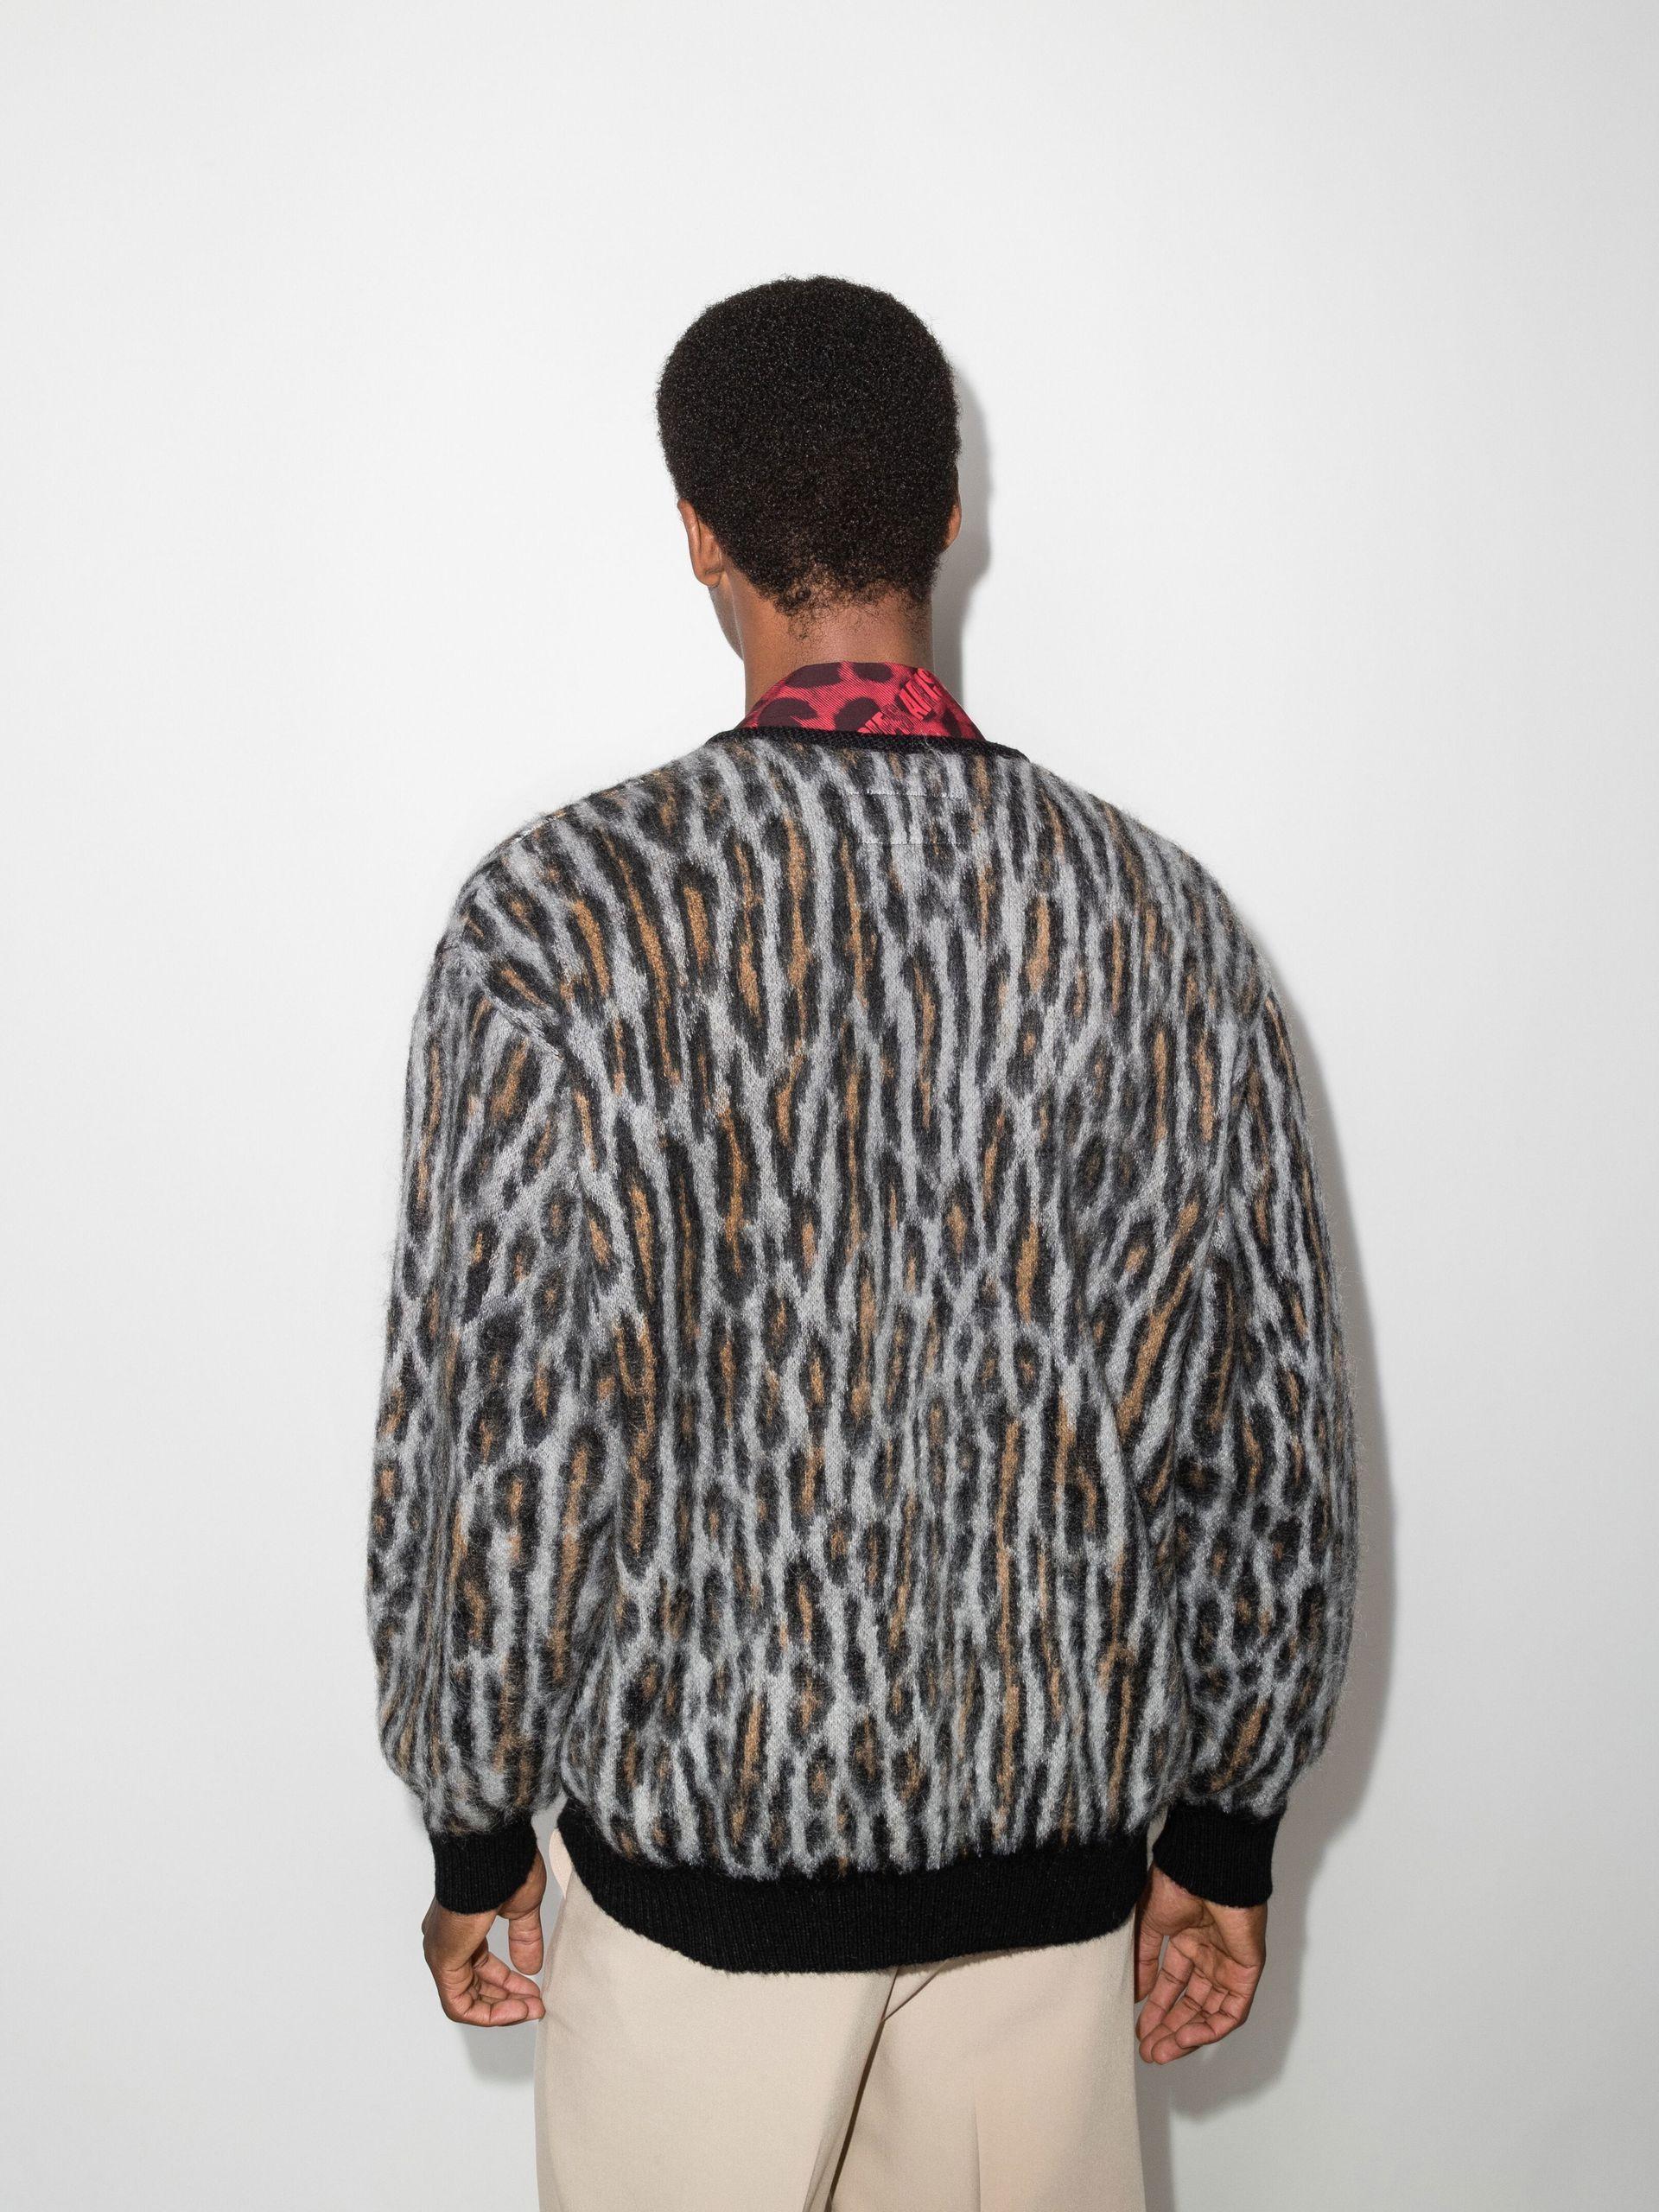 Wacko Maria Leopard Intarsia Knitted Cardigan - Men's - Mohair 